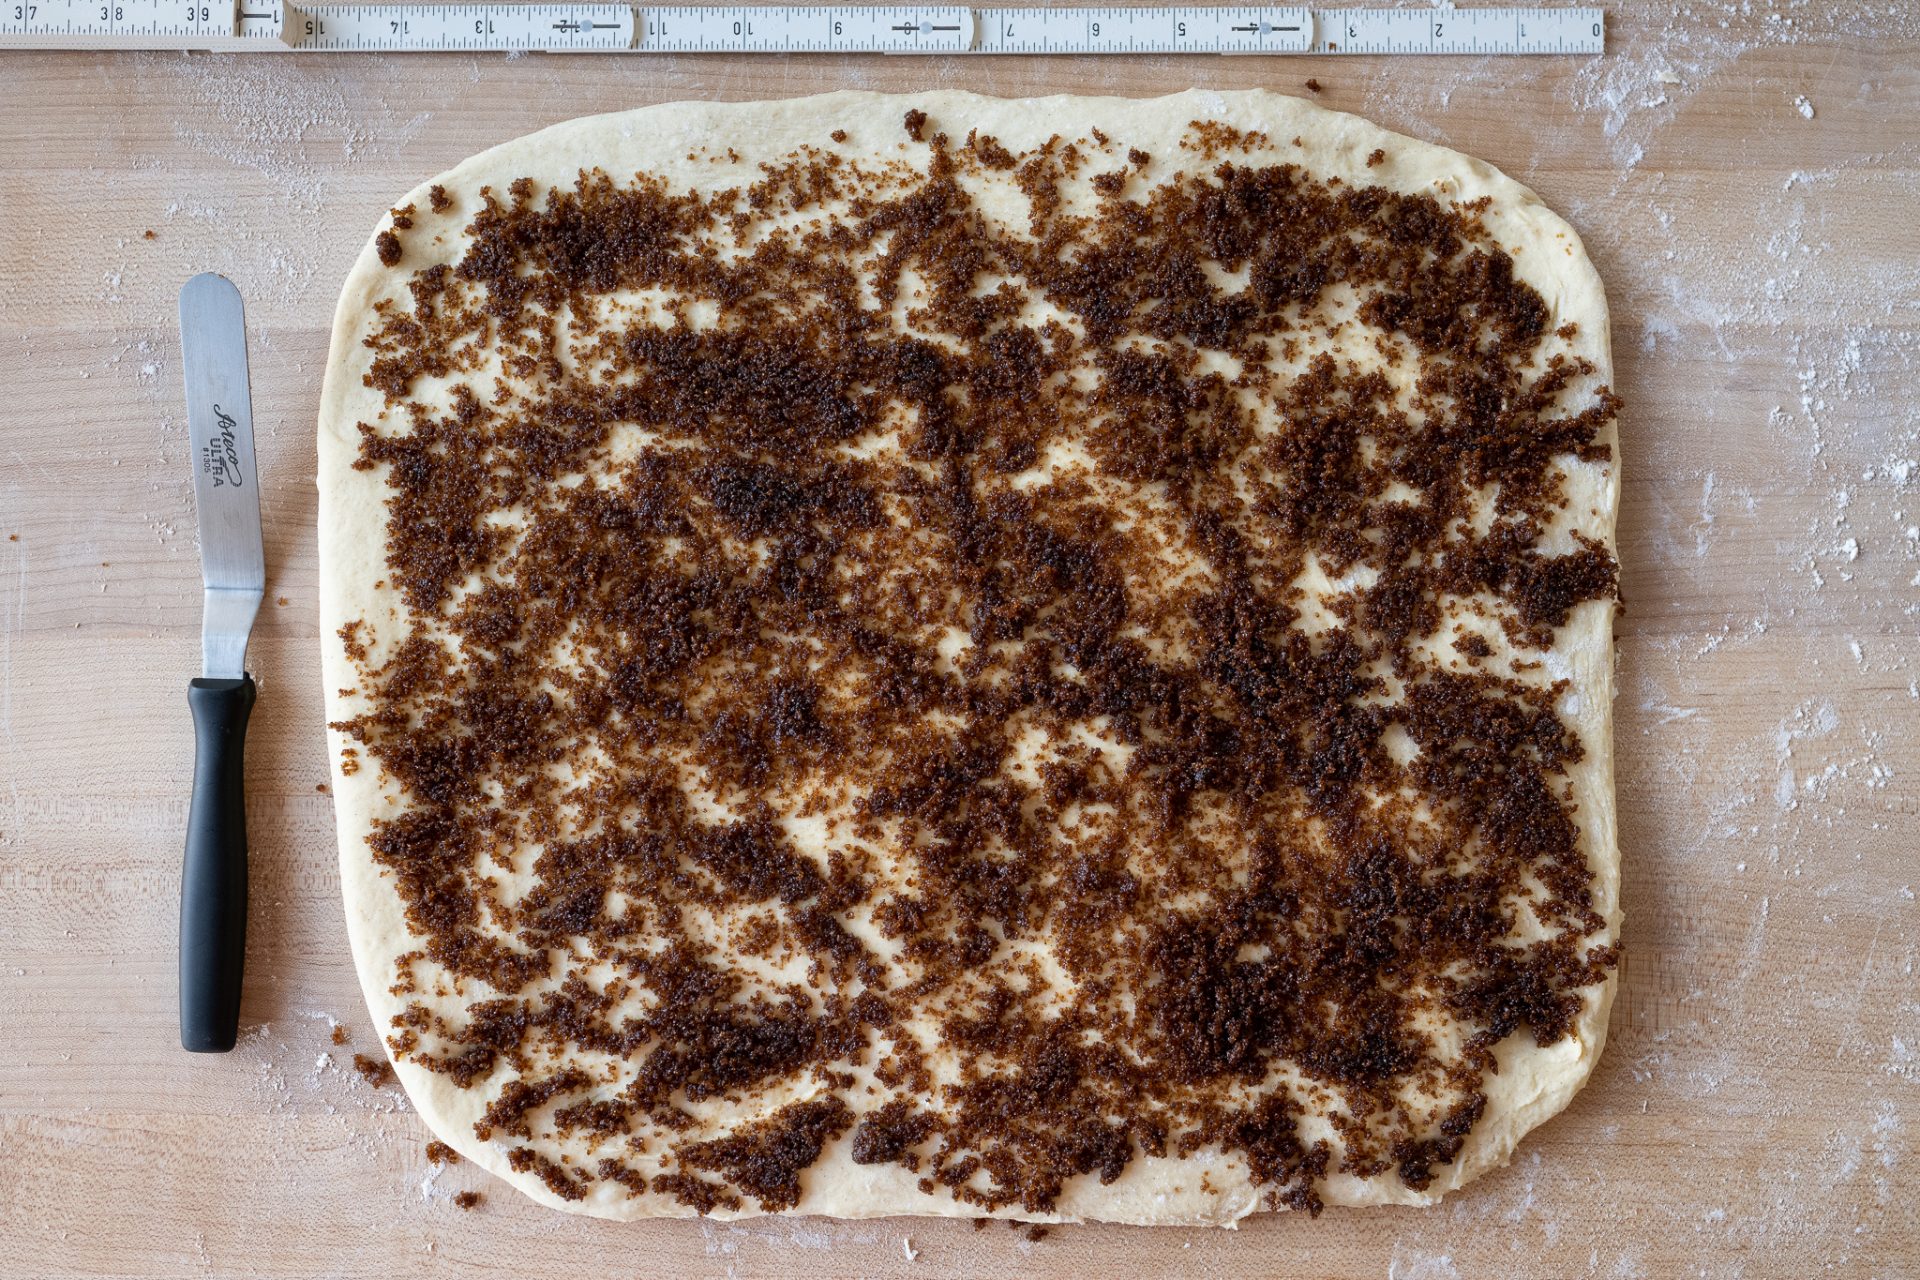 Cardamom and cinnamon filling spread on dough